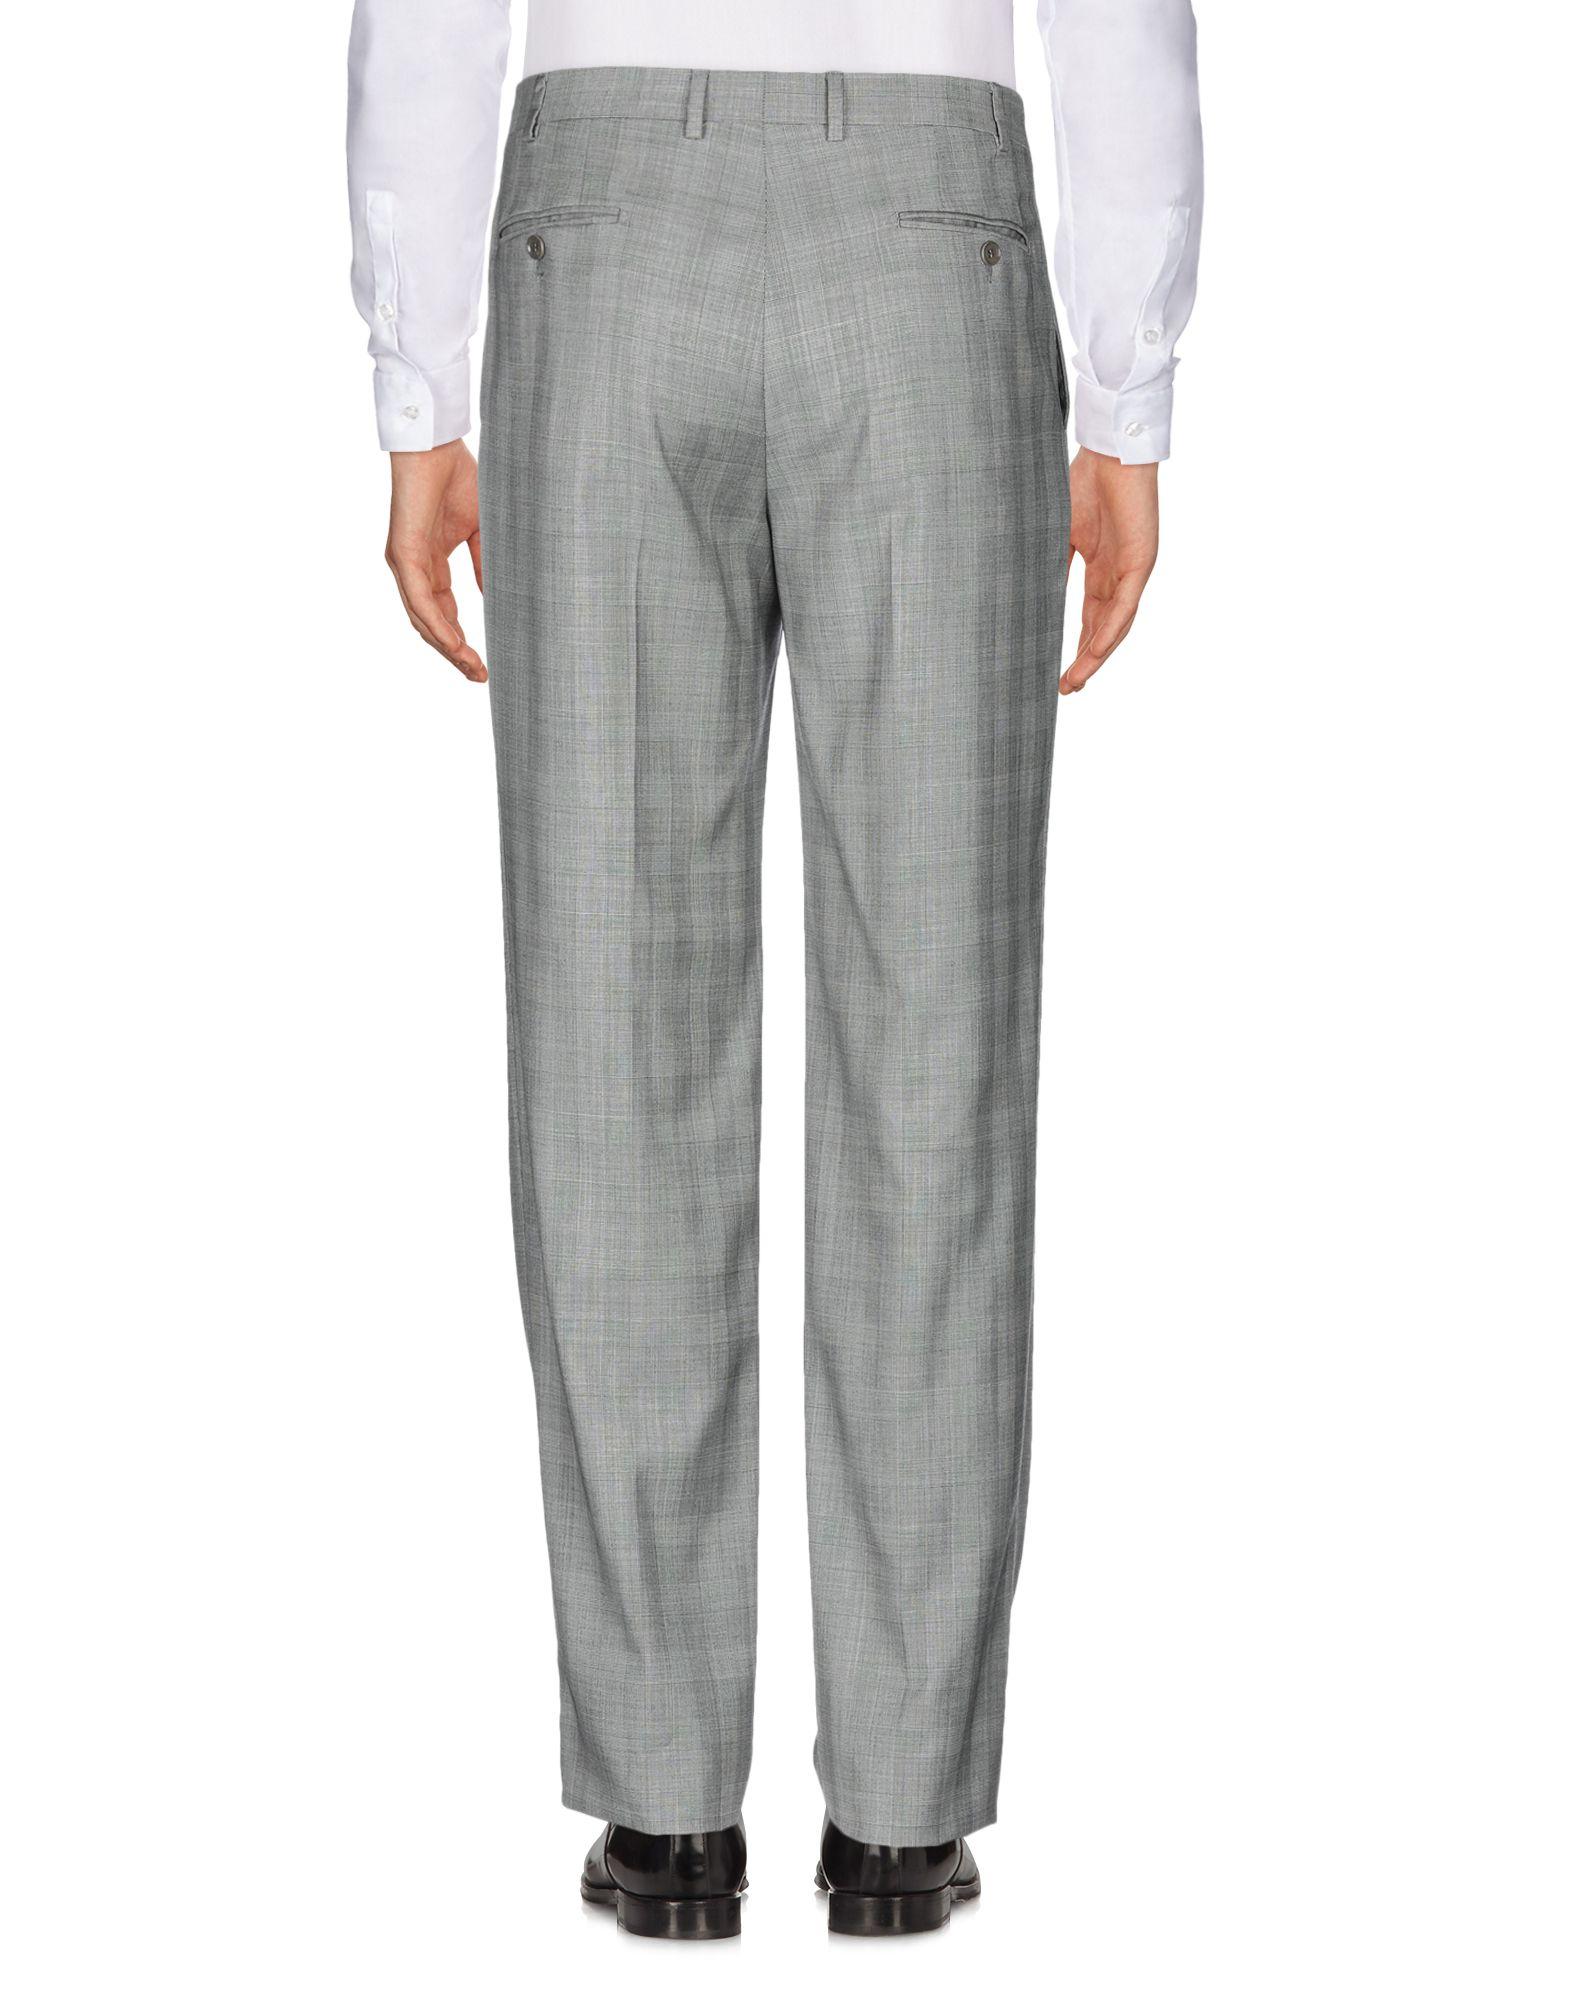 Pal Zileri Wool Casual Pants in Grey (Gray) for Men - Lyst